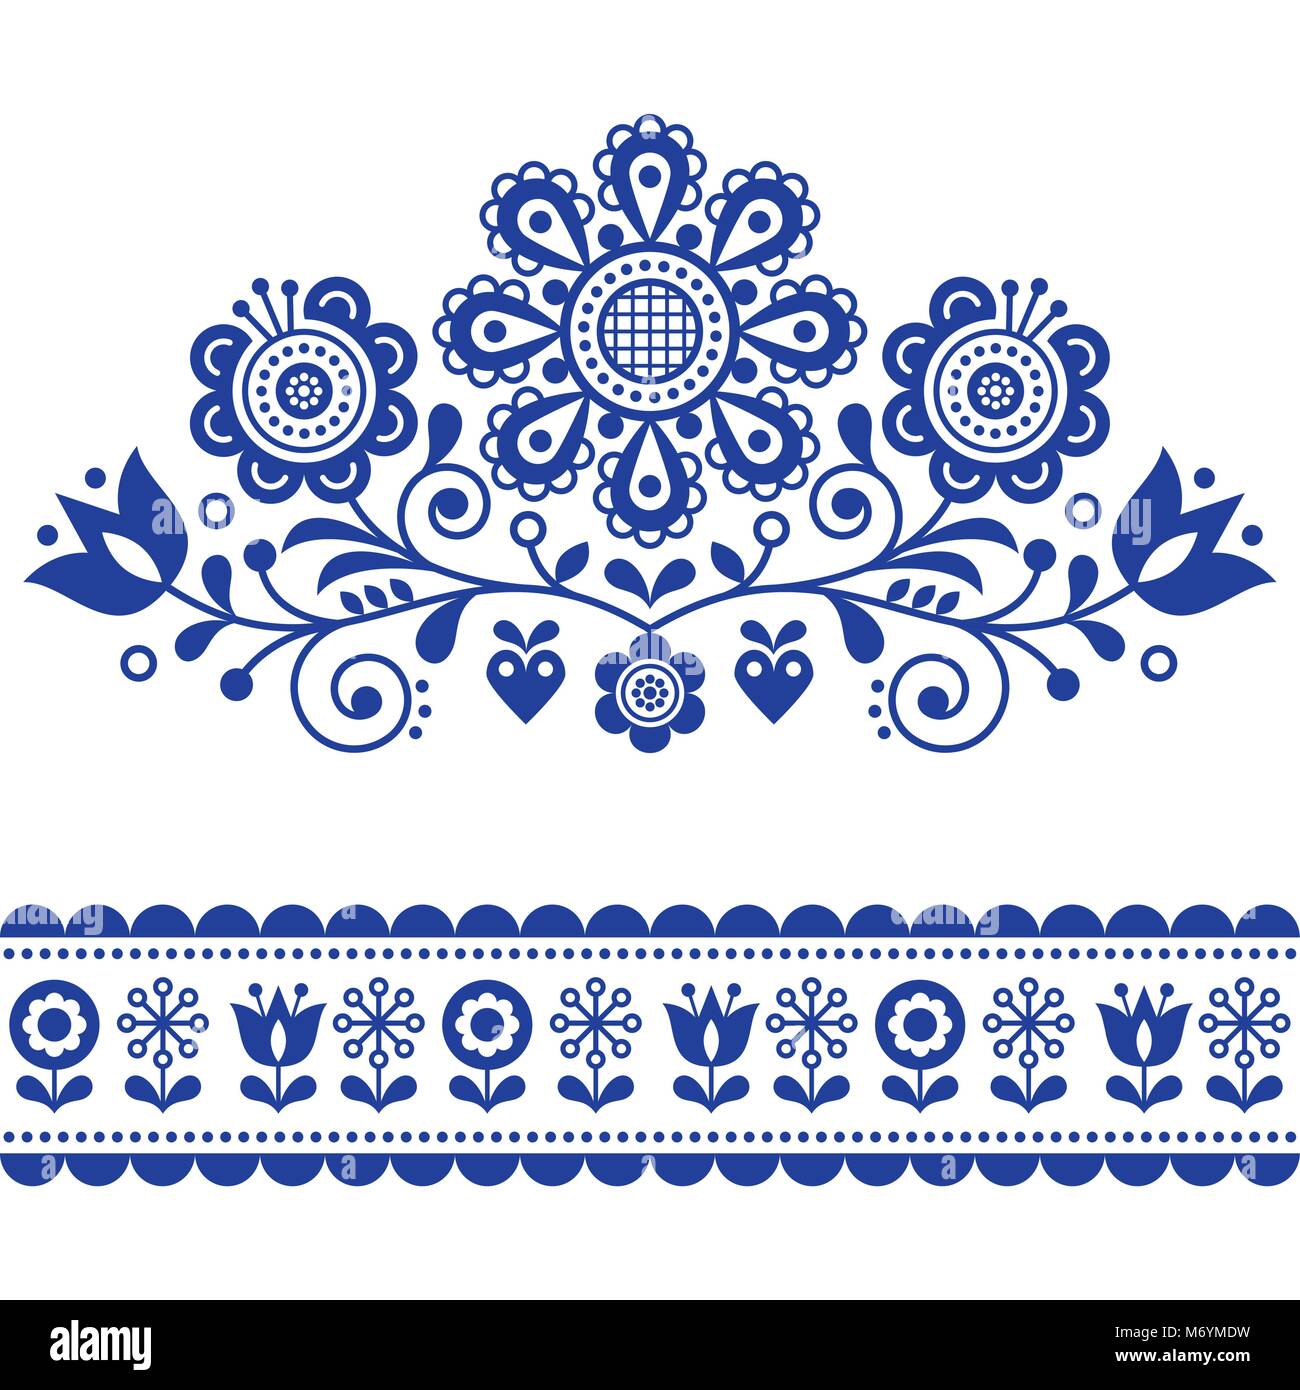 Scandinavian vector folk art pattern with flowers, traditional floral frame or border design Stock Vector